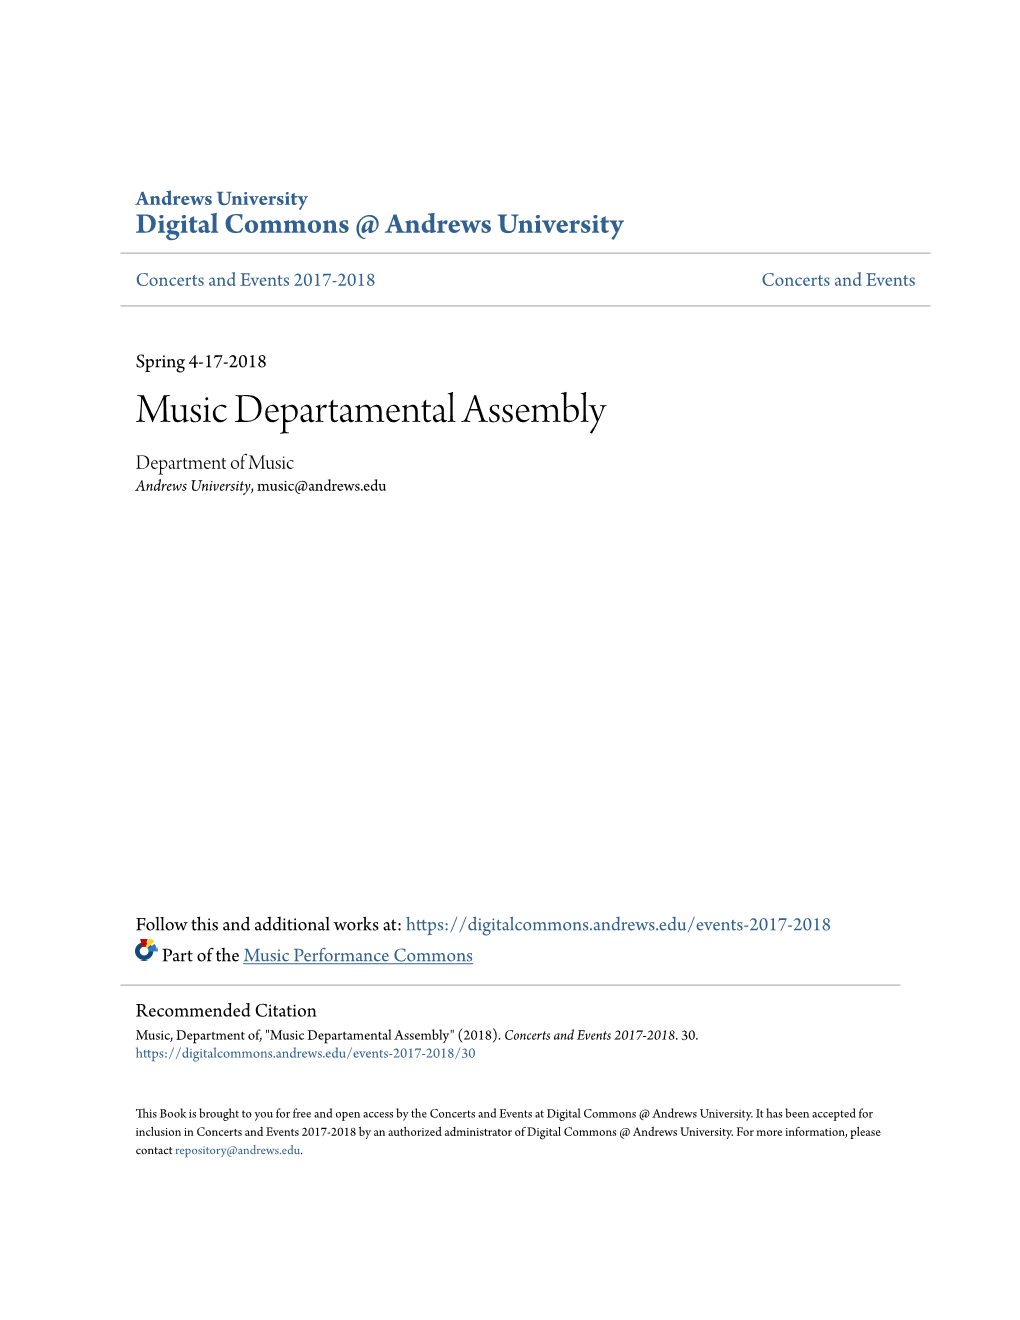 Music Departamental Assembly Department of Music Andrews University, Music@Andrews.Edu